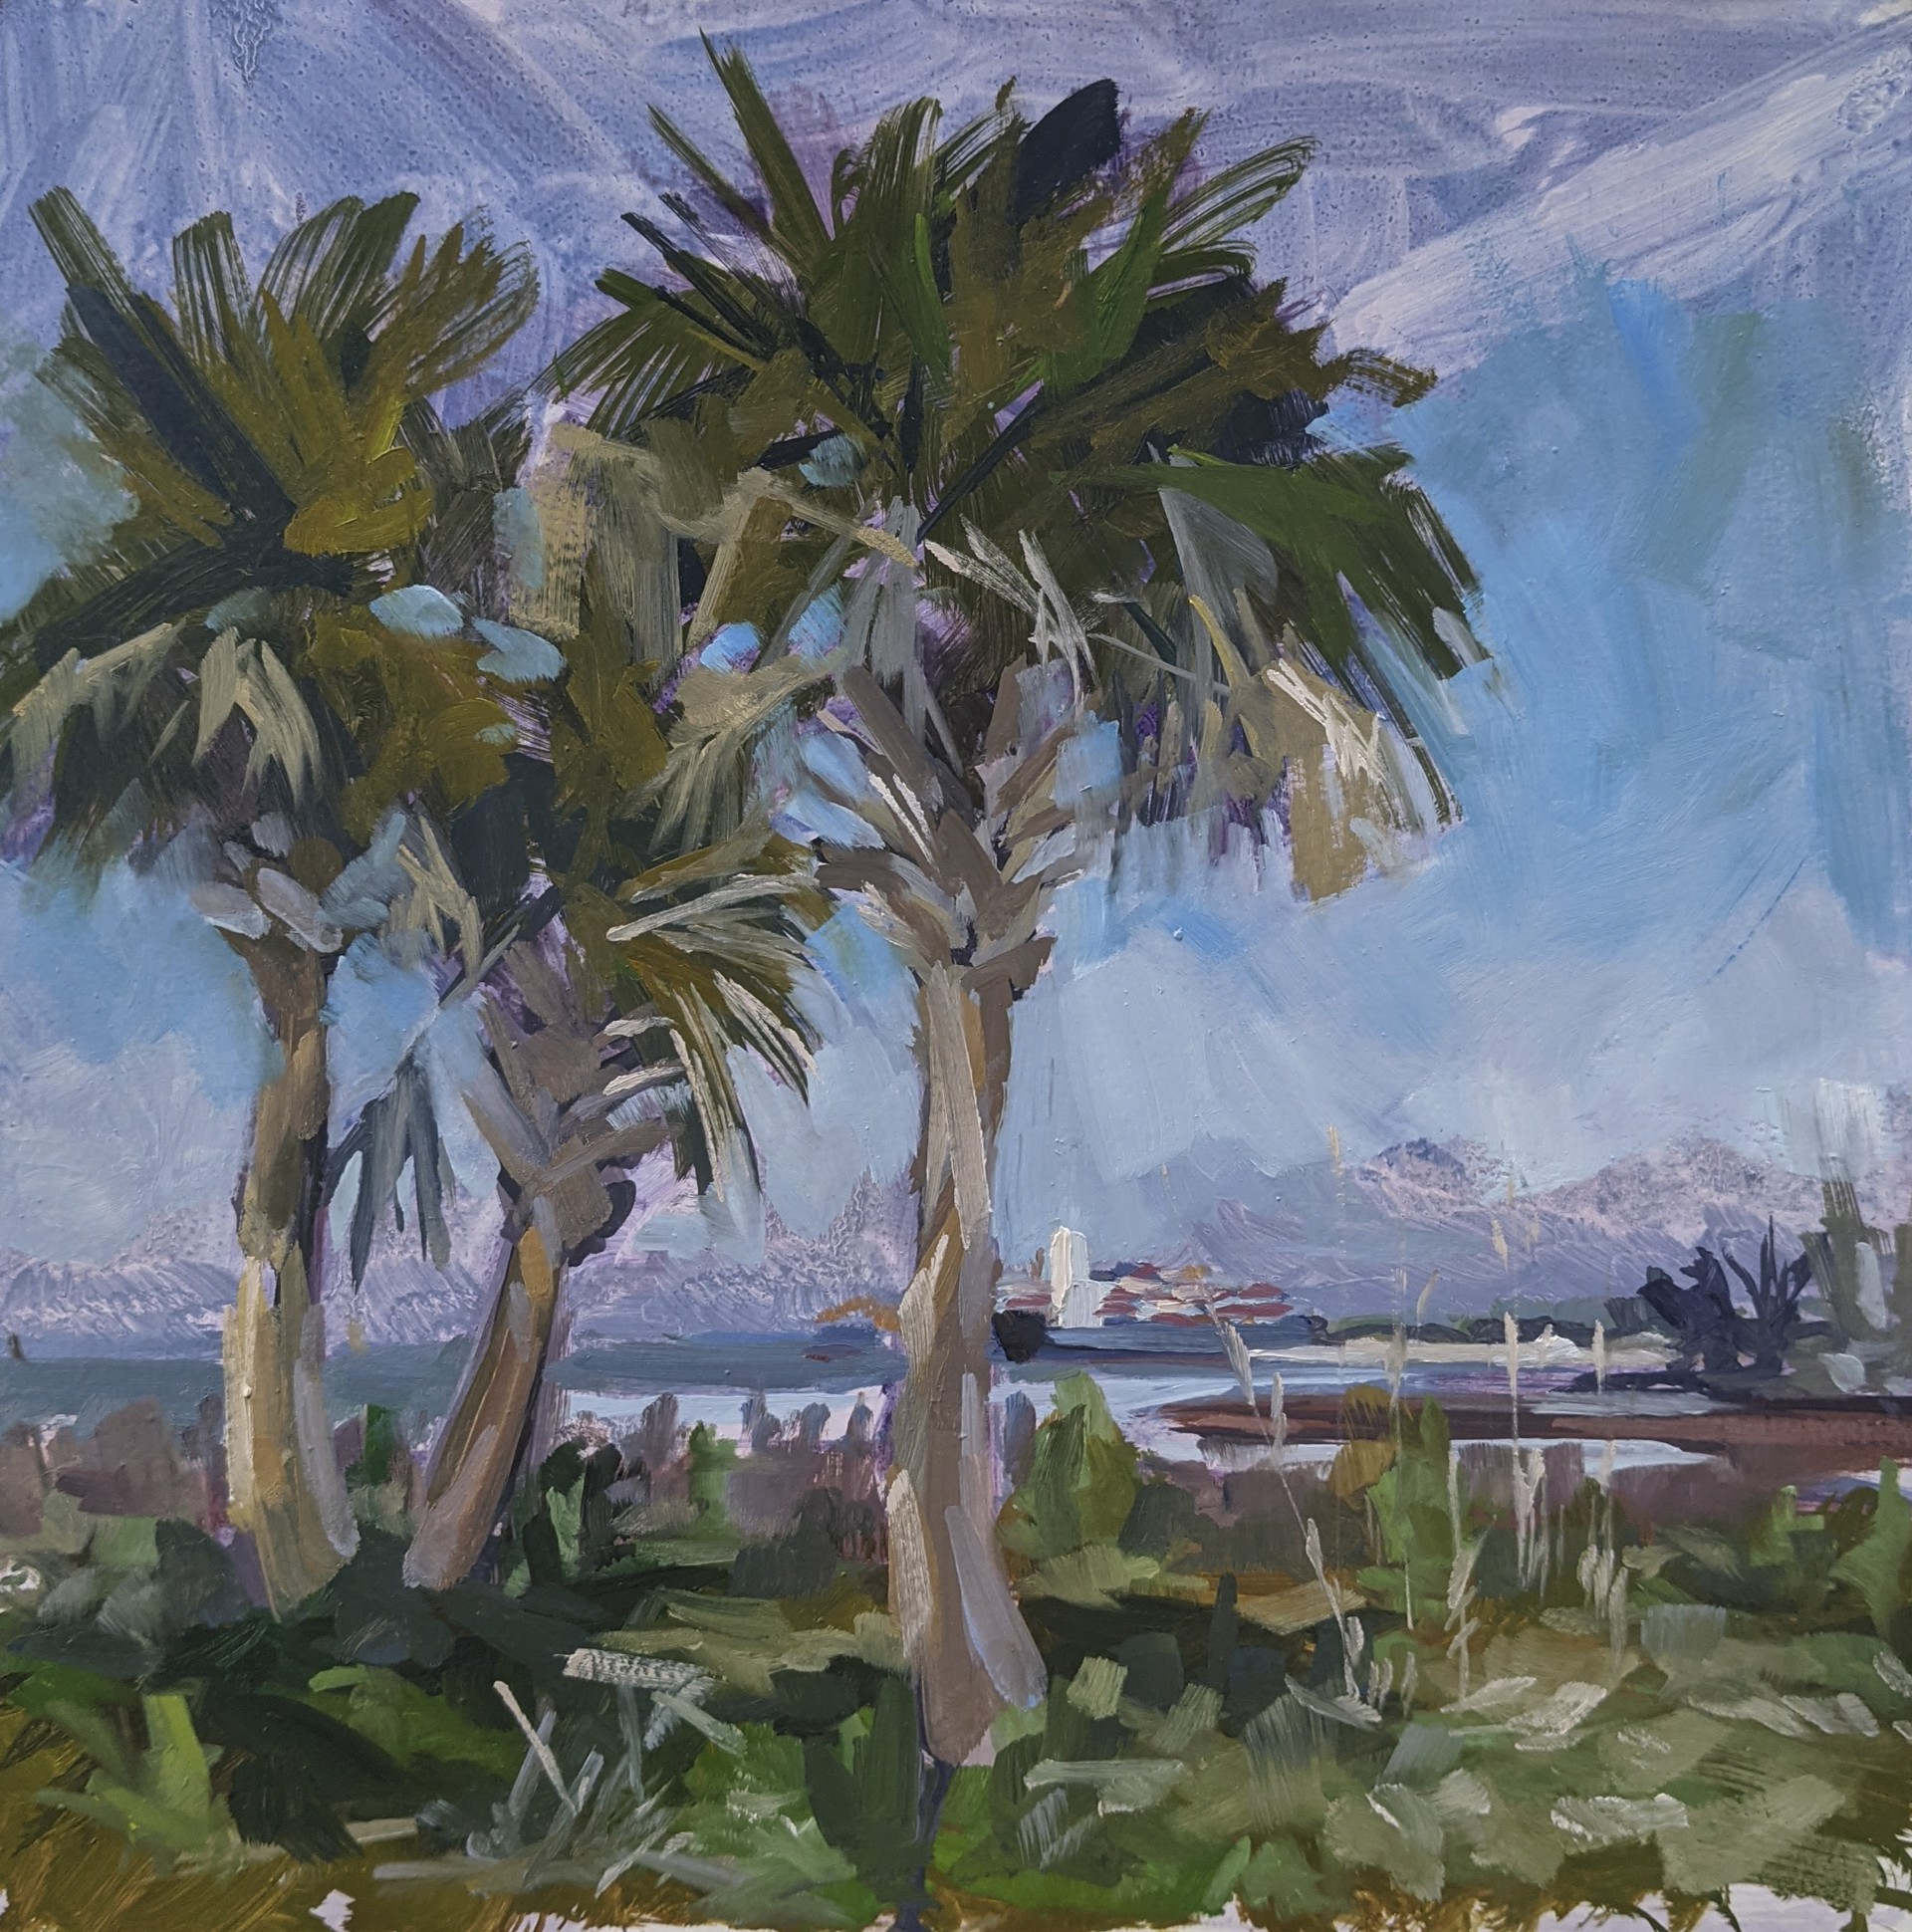 Battery Park Palms, Tybee Island by kip bradley